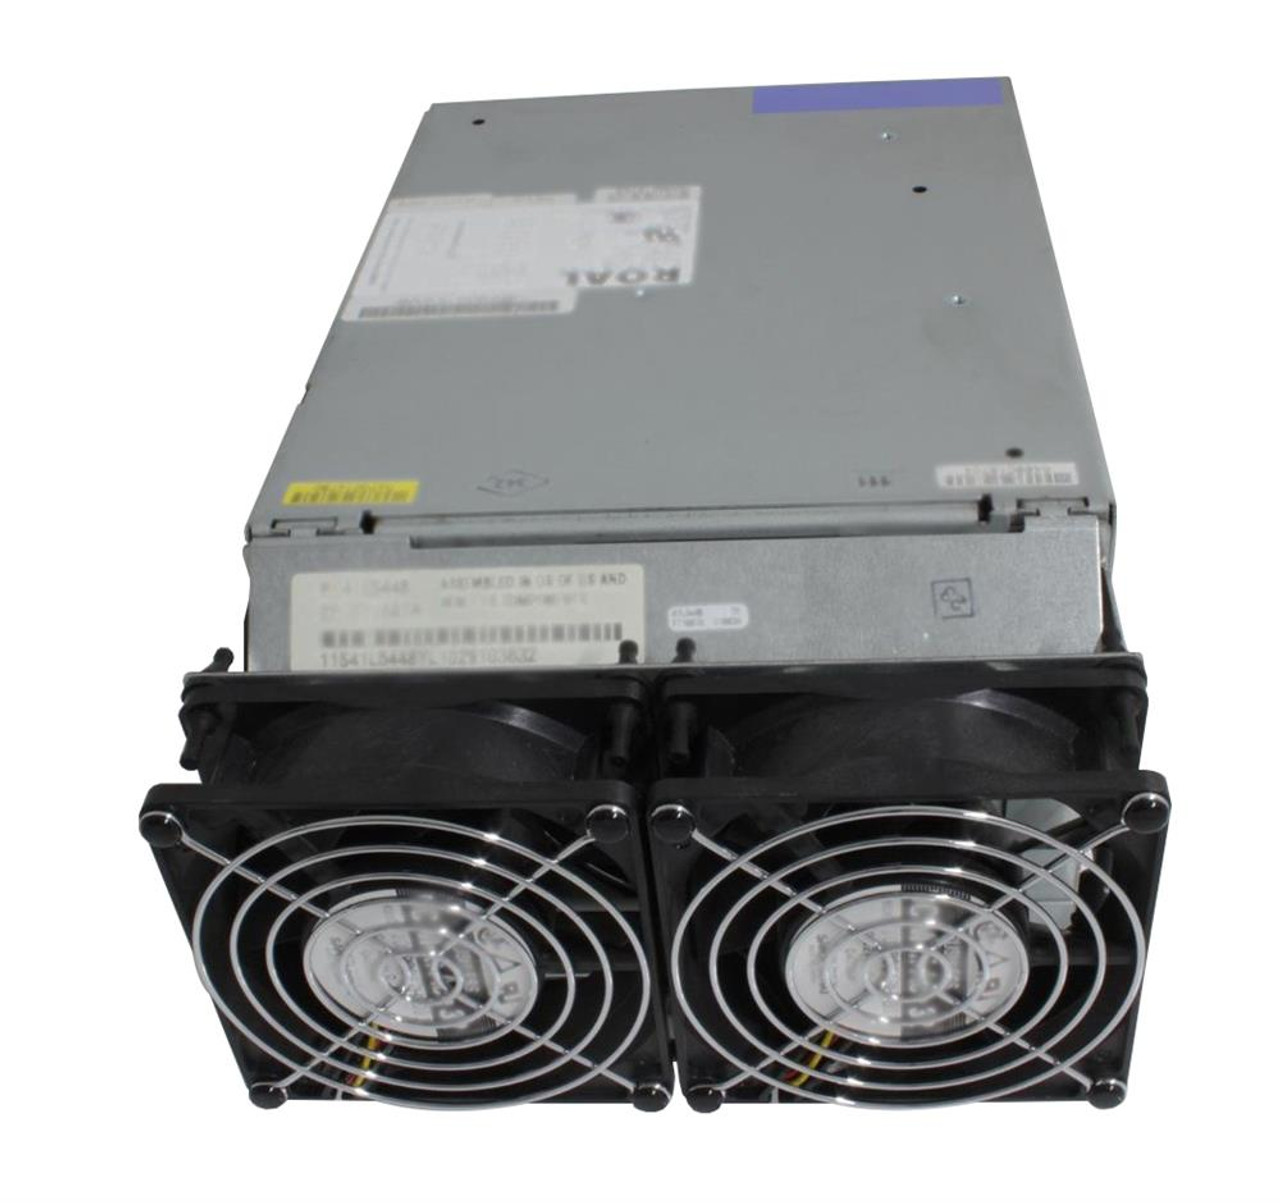 24L1400 IBM 575-Watts Redundant Power Supply for RS6000 Server